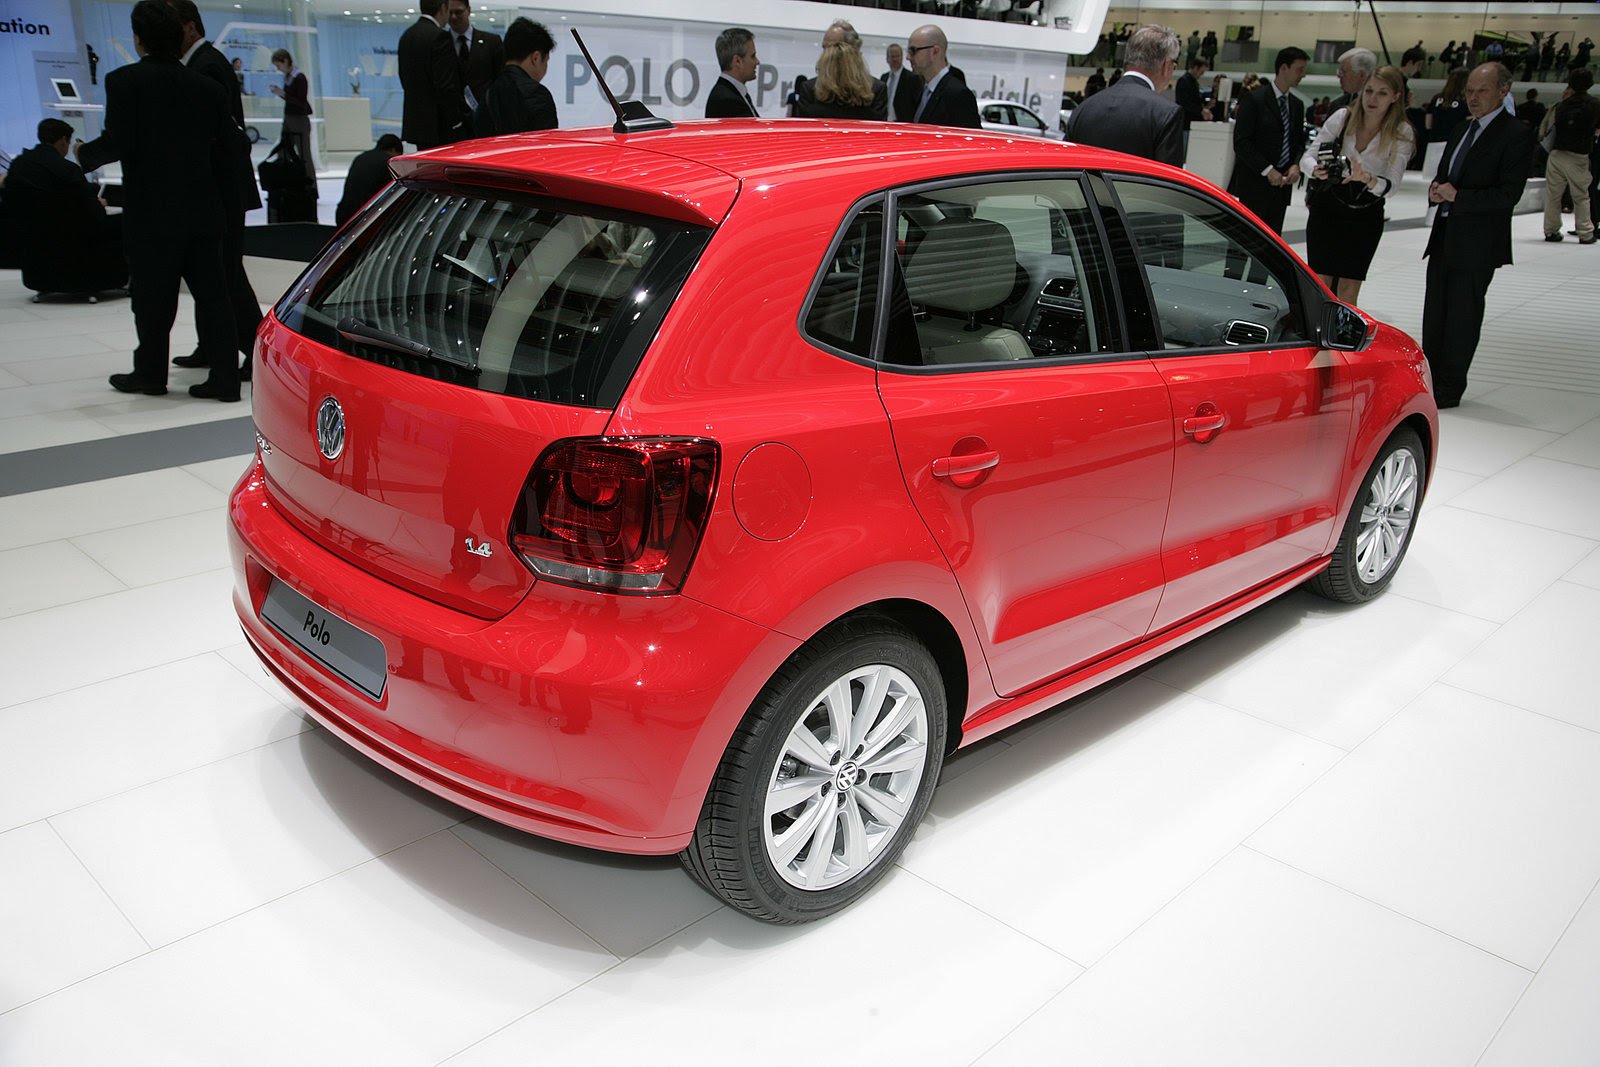 Фольксваген поло 3 купить. Polo Volkswagen мини. Фольксваген поло мини 2007. Поло мини фольтцваген. Мини h4 VW Polo.